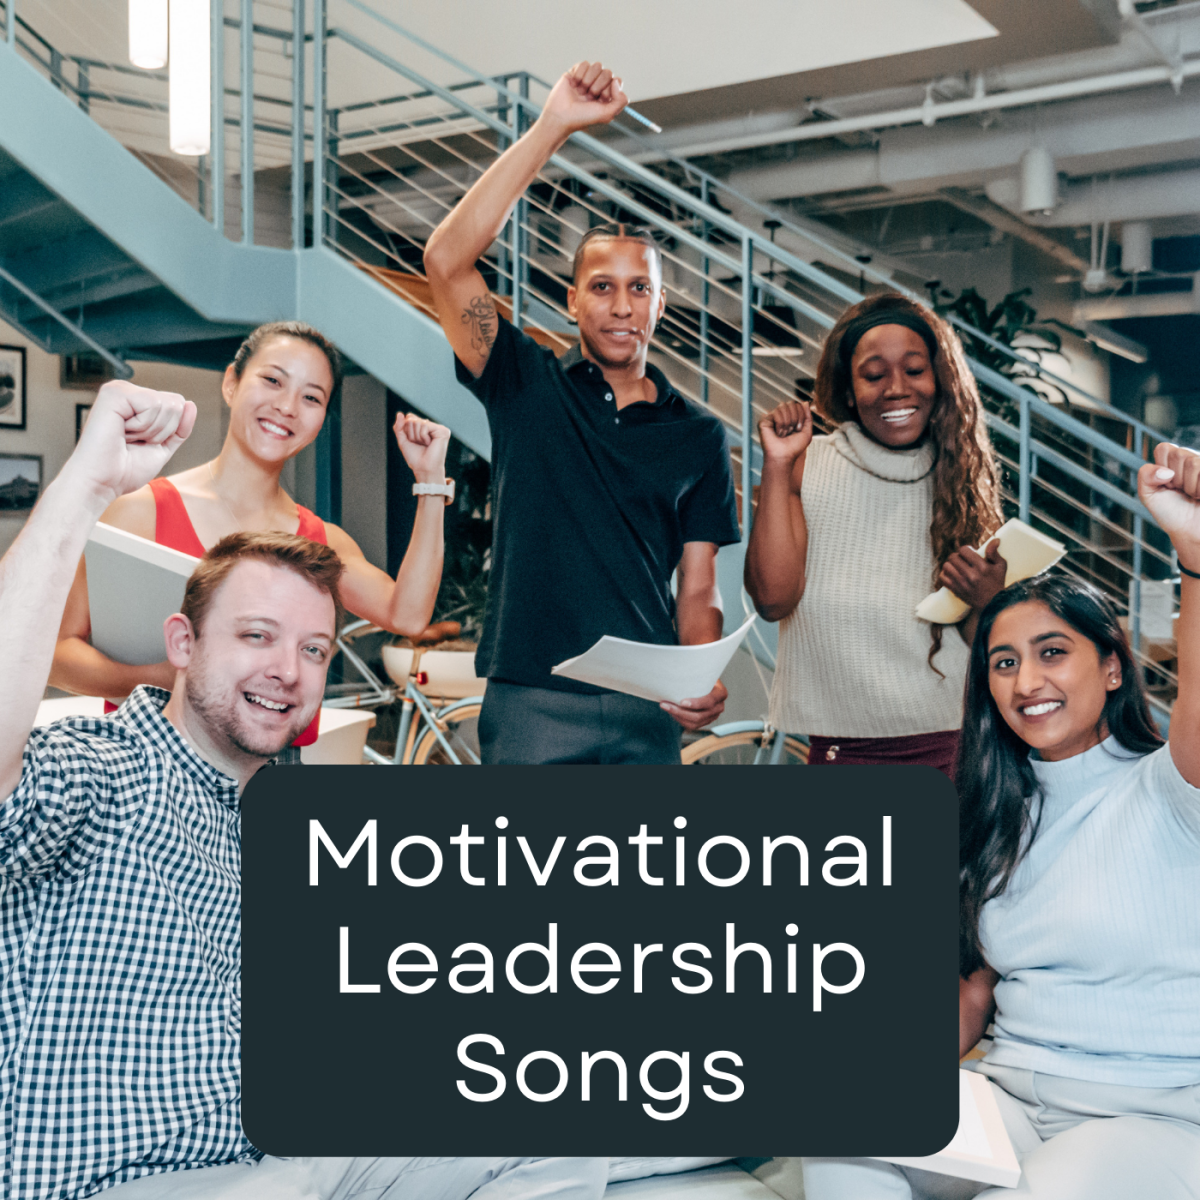 55 Motivational Leadership Songs